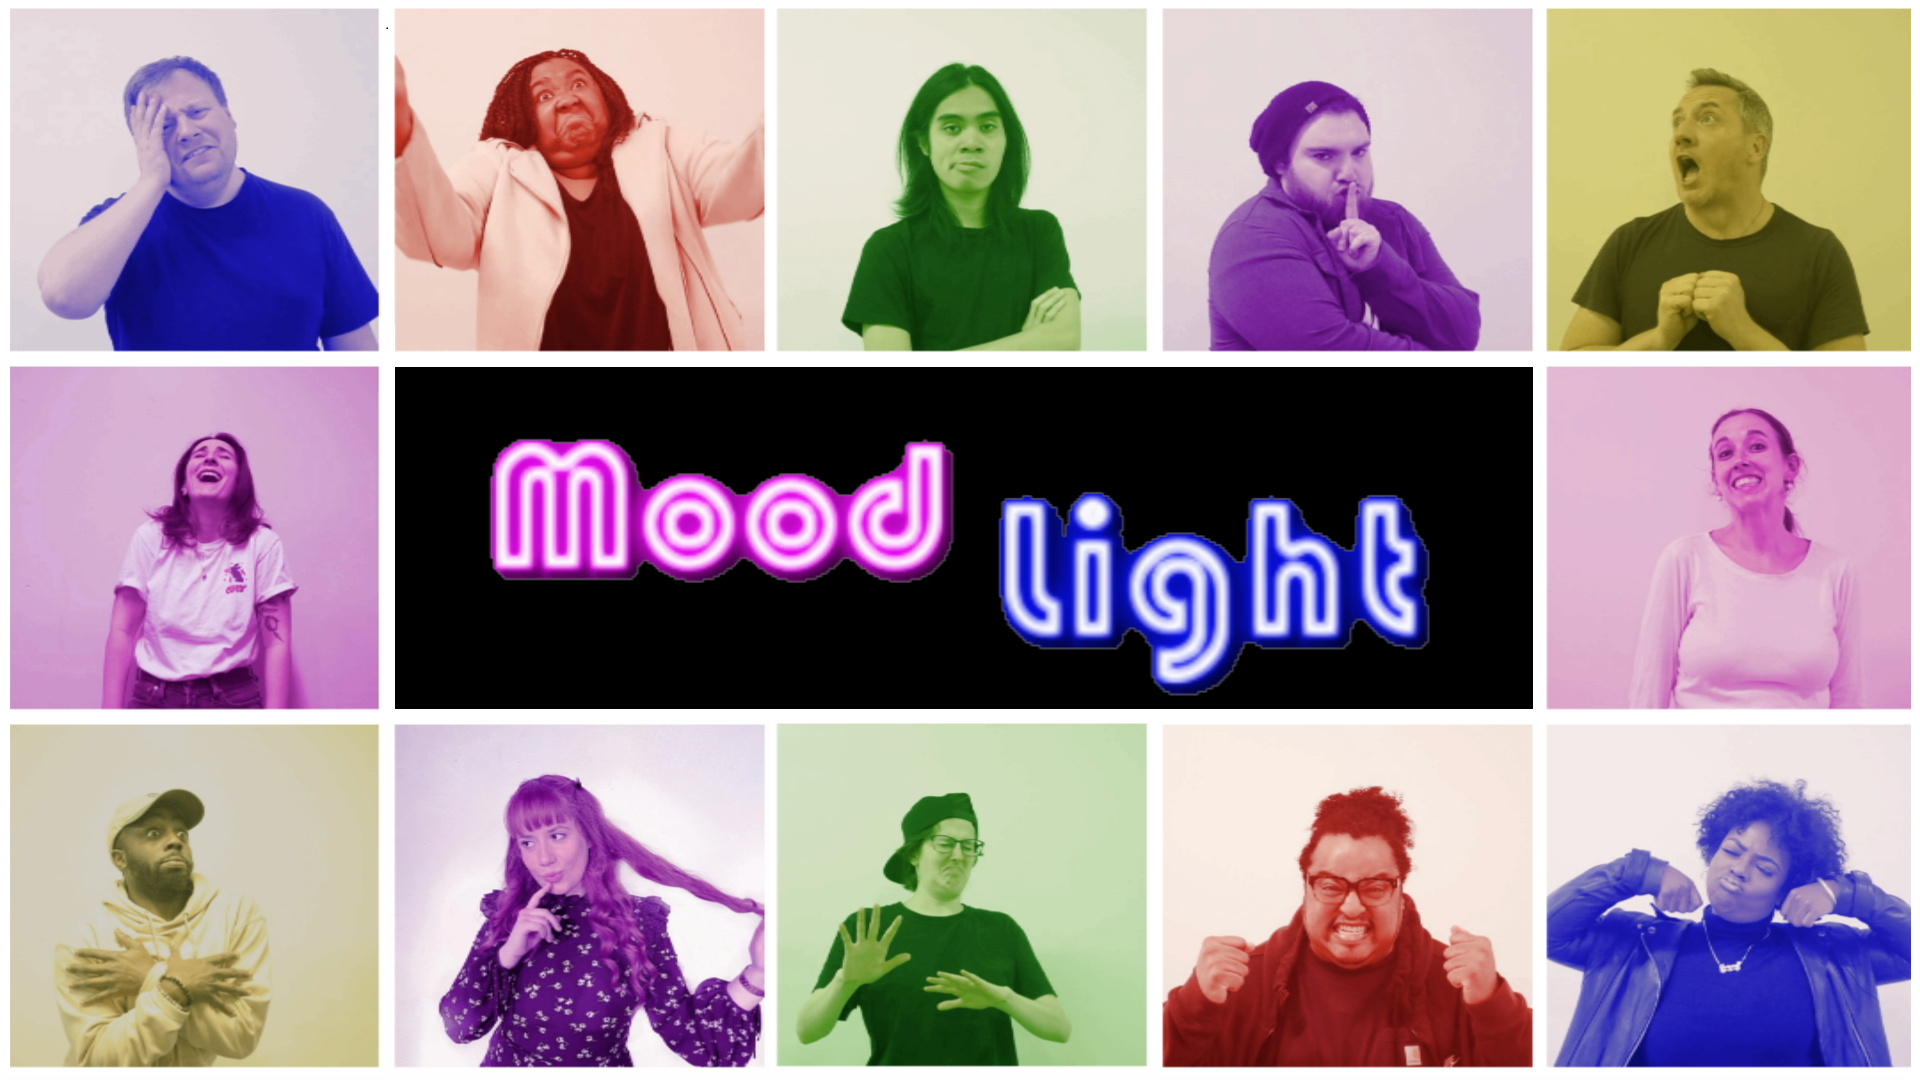 Mood Light